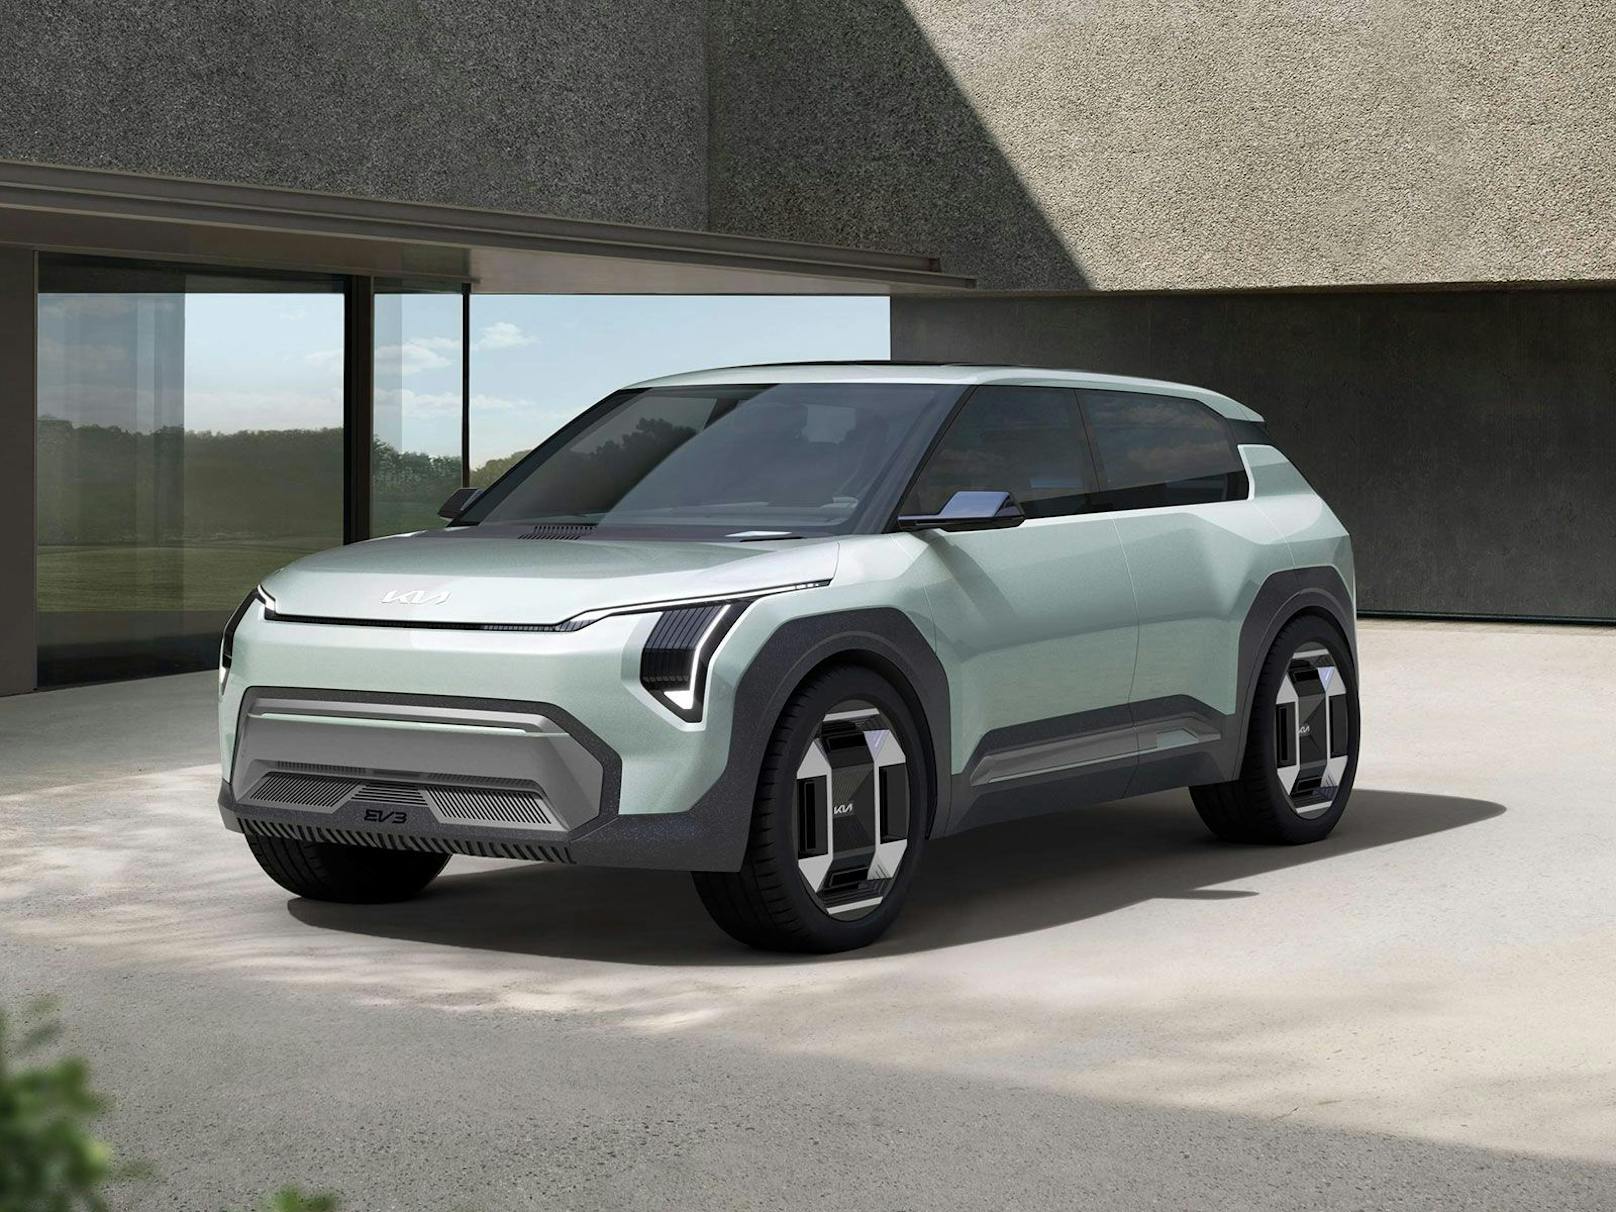 Kia präsentiert drei neue Elektroautos